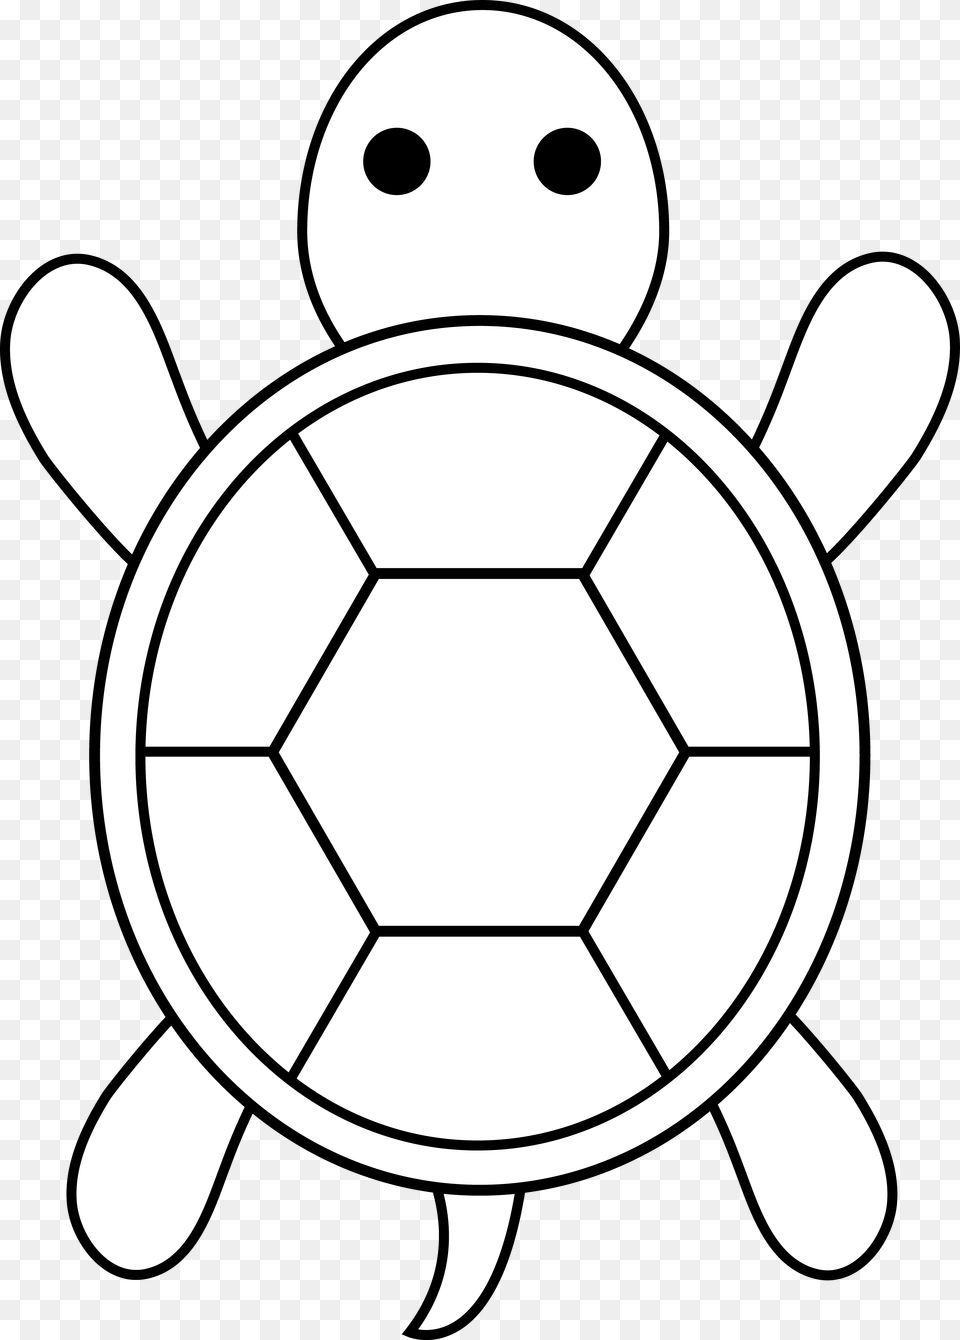 Turtle, Ball, Football, Soccer, Soccer Ball Png